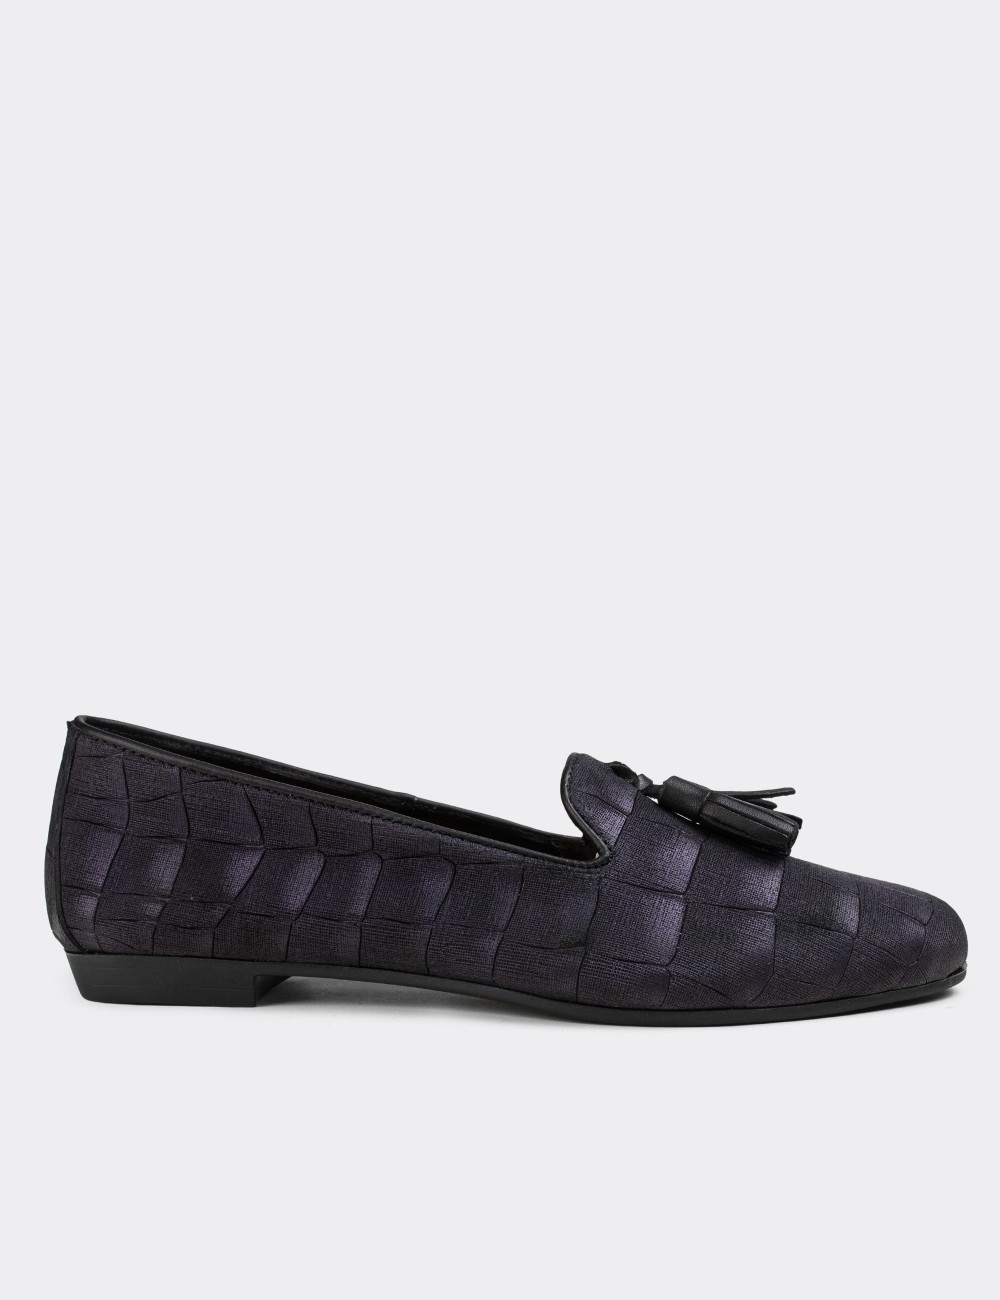 Purple Nubuck Leather Loafers  - E3204ZMORC01